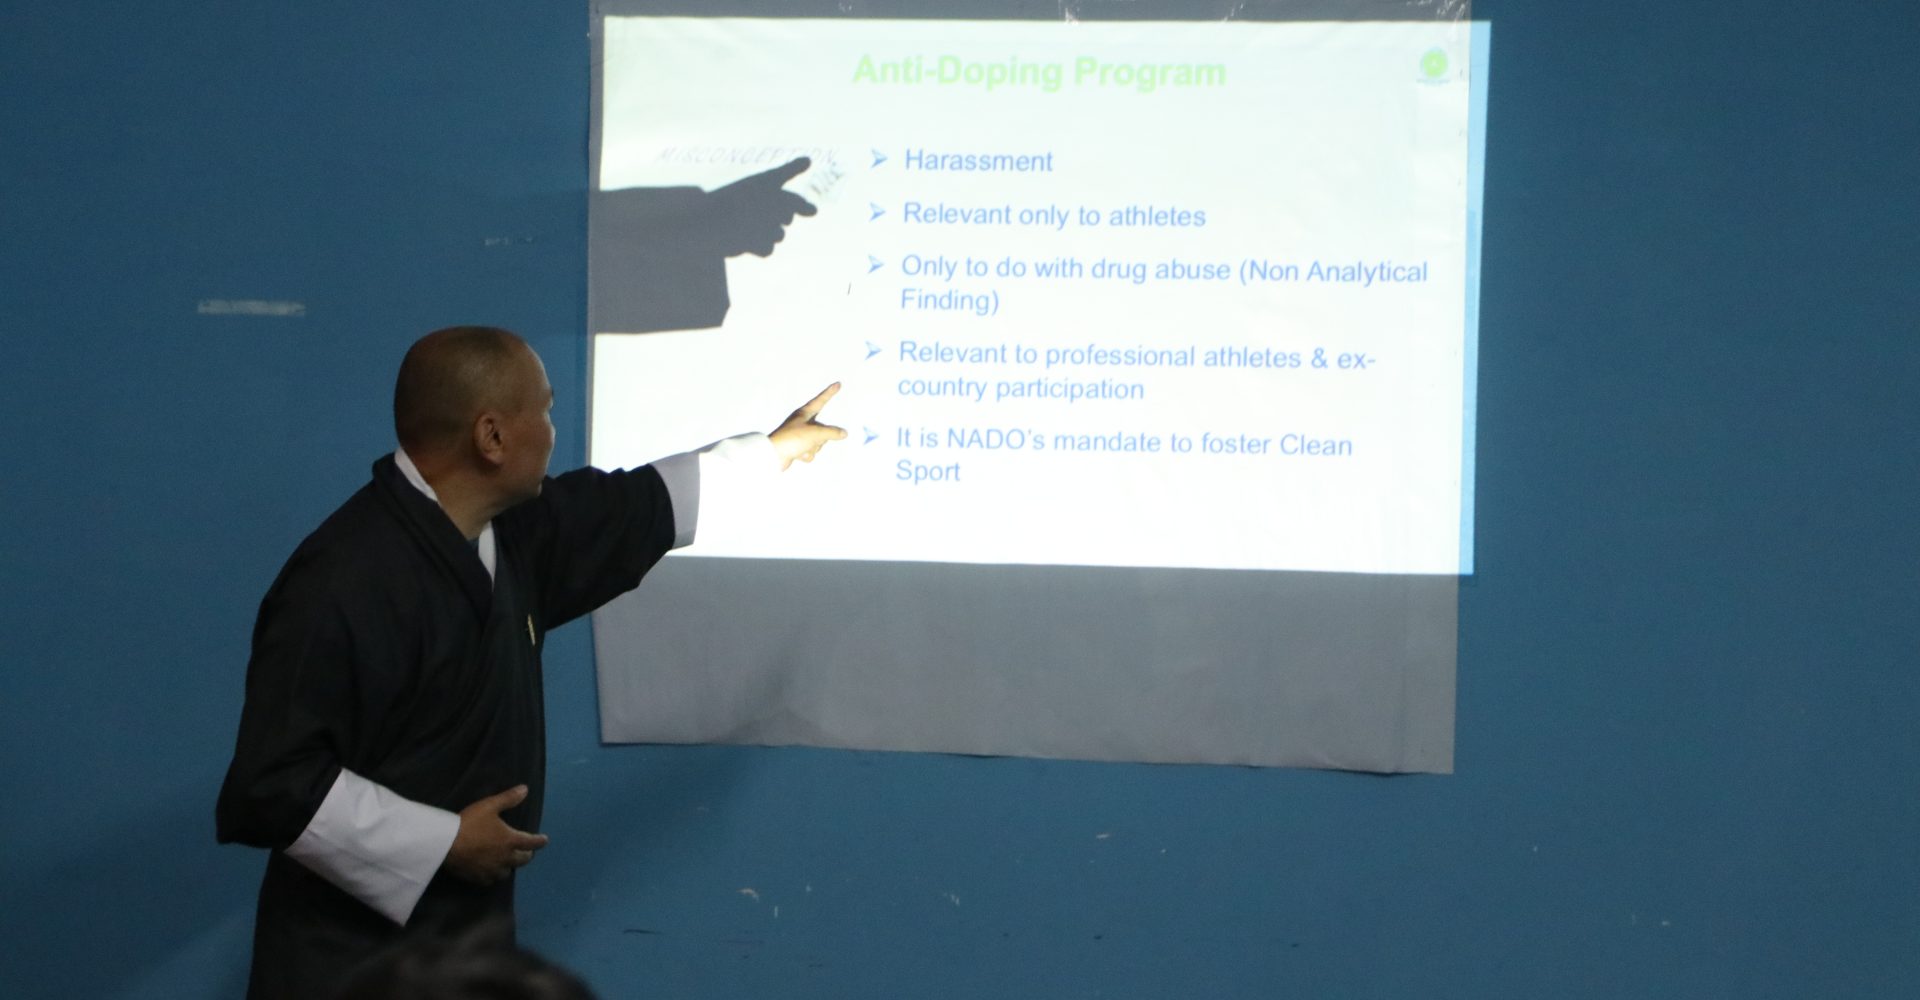 BADC conducts informative presentation for badminton federation athletes